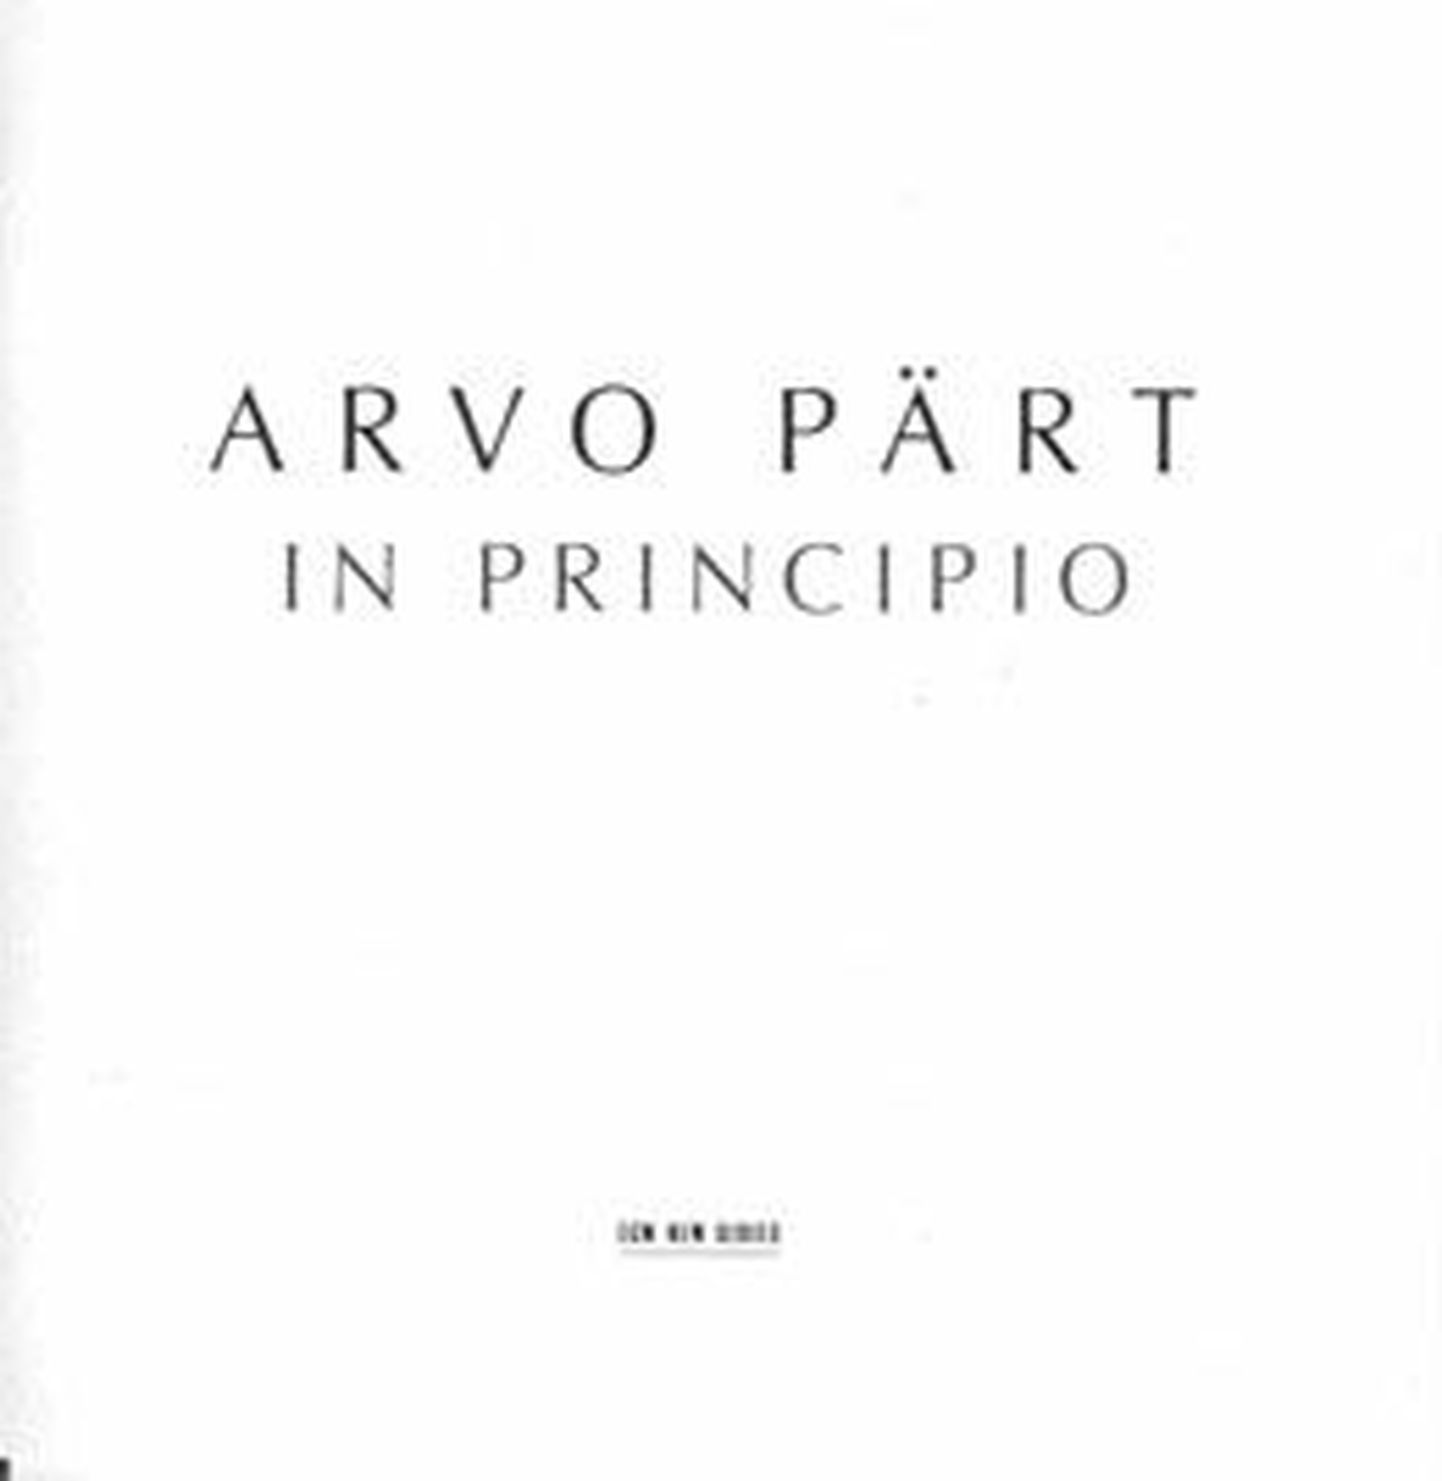 Arvo Pärt “In principio”.